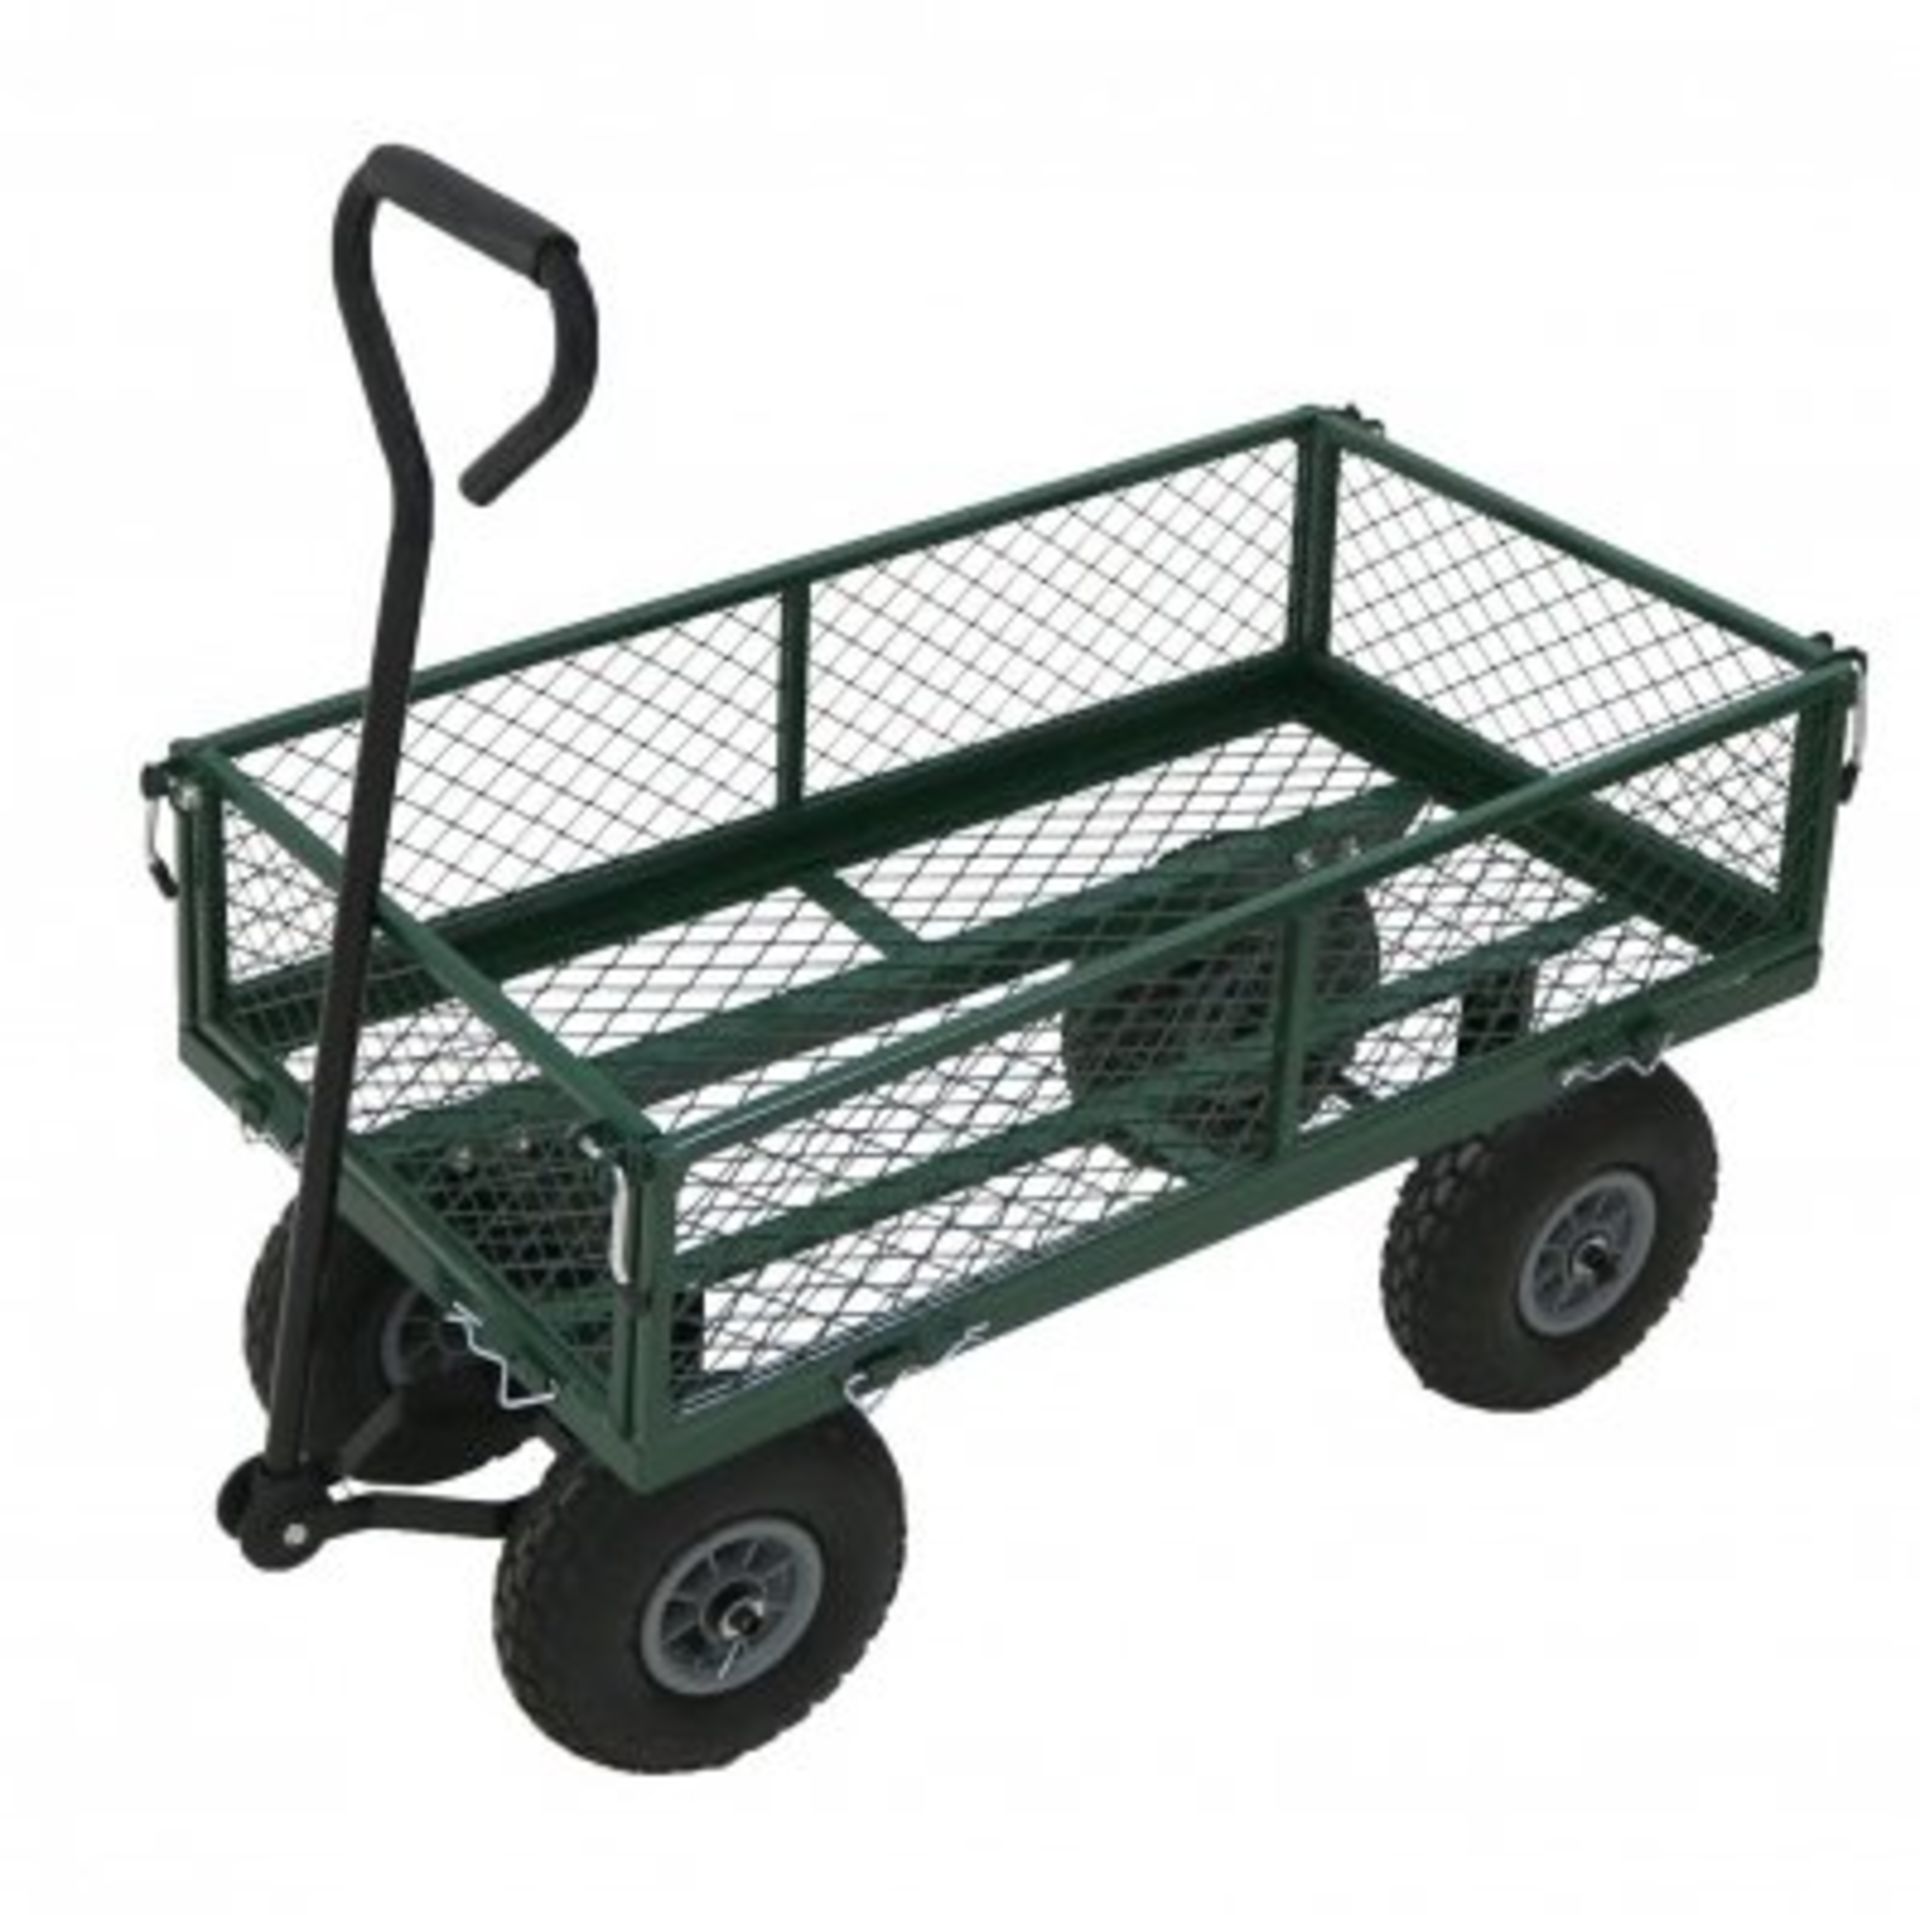 (ZP12) Heavy Duty Metal Gardening Trolley - Green Trailer Cart Our latest arrival is the gar...